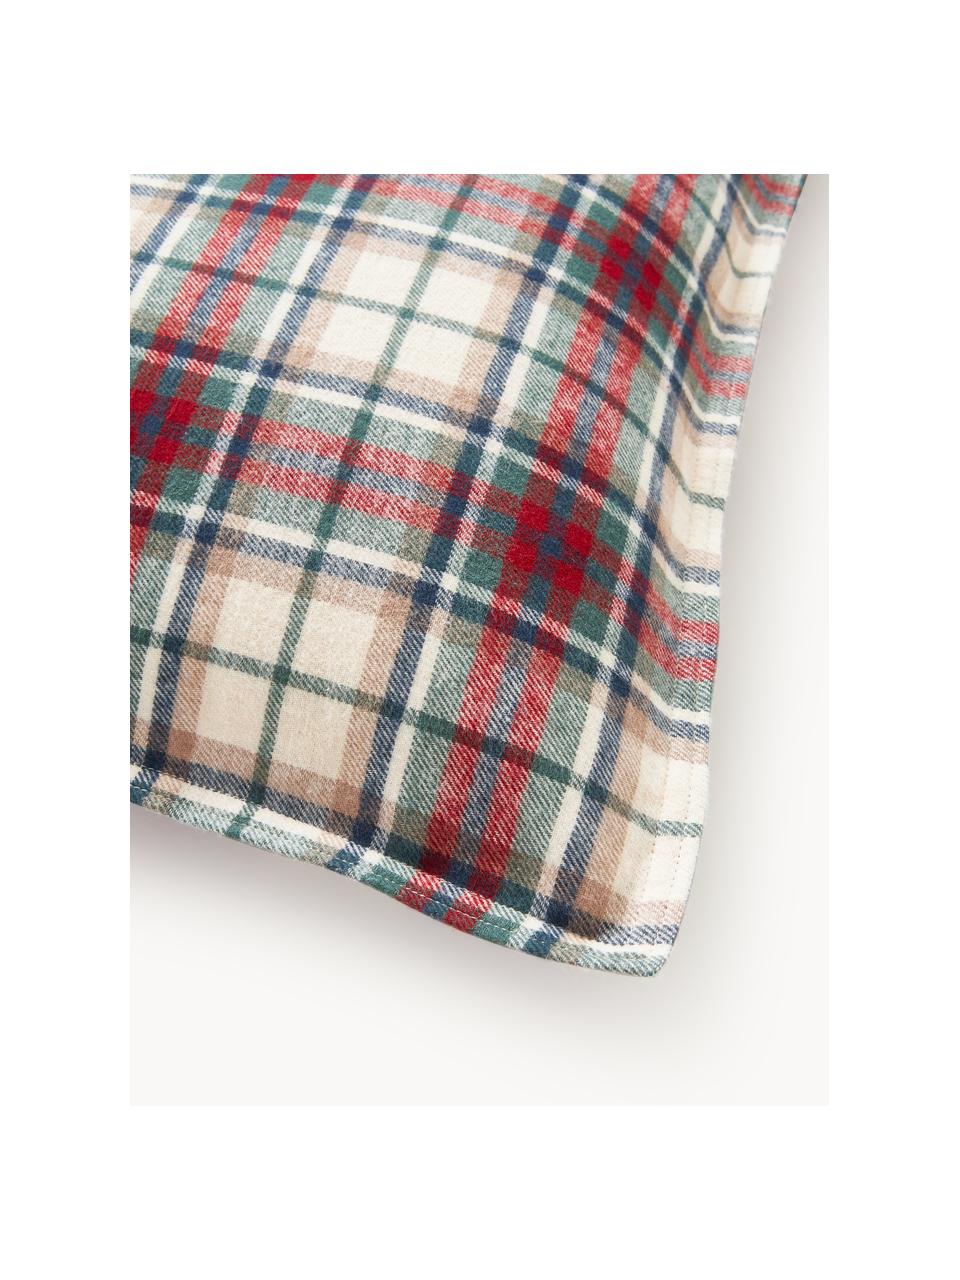 Funda de almohada de franela a cuadros Linsay, Beige claro, rojo, verde, An 45 x L 110 cm